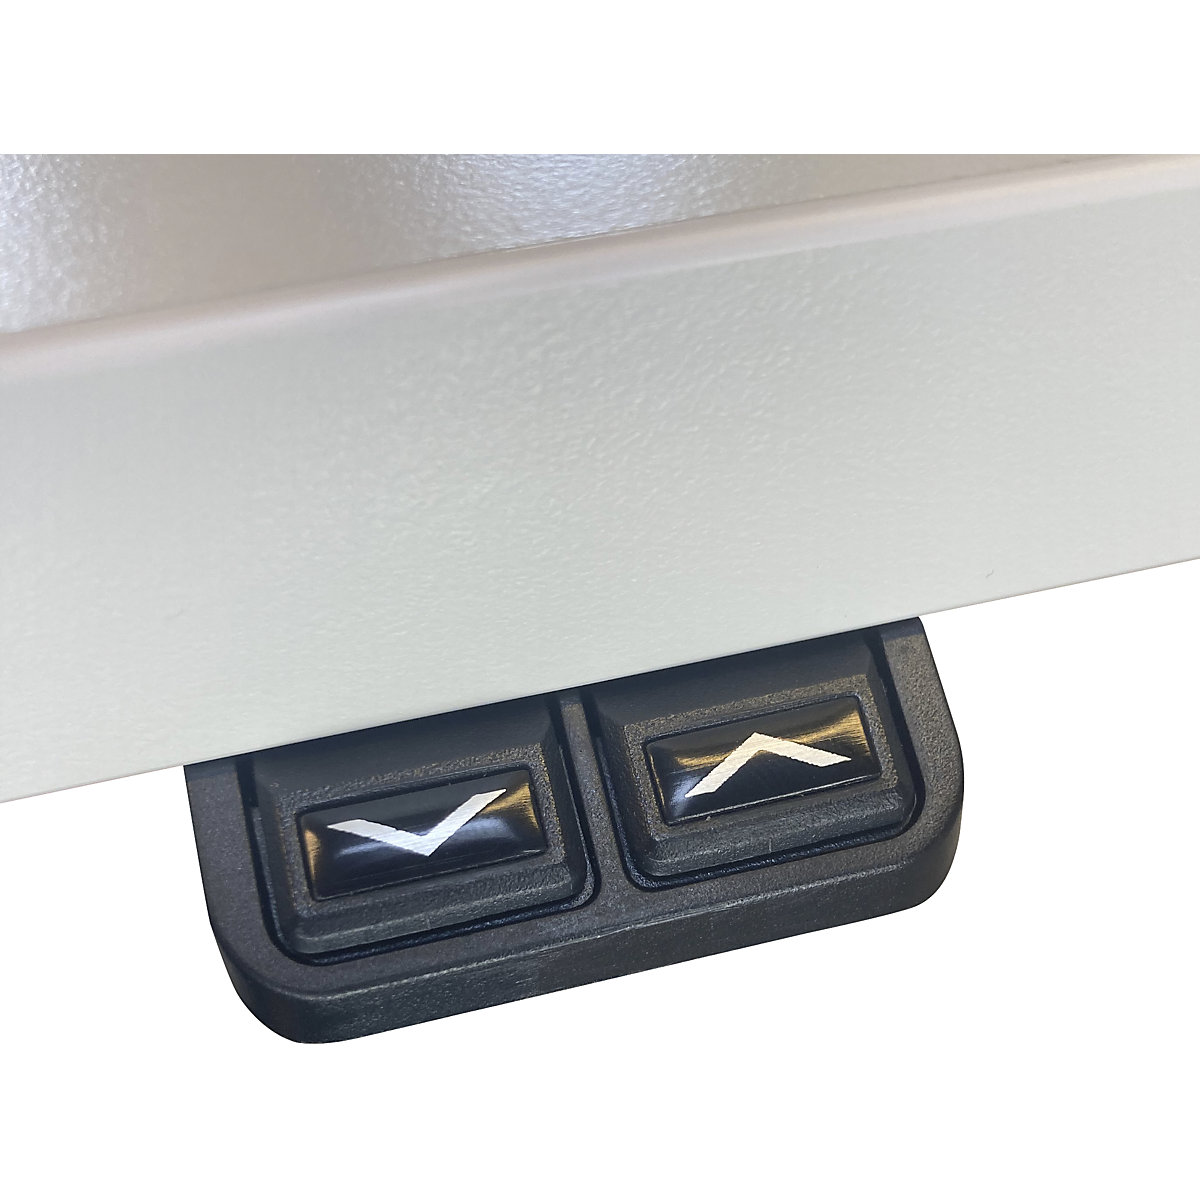 Venla desk, electrically height adjustable – eurokraft basic (Product illustration 2)-1